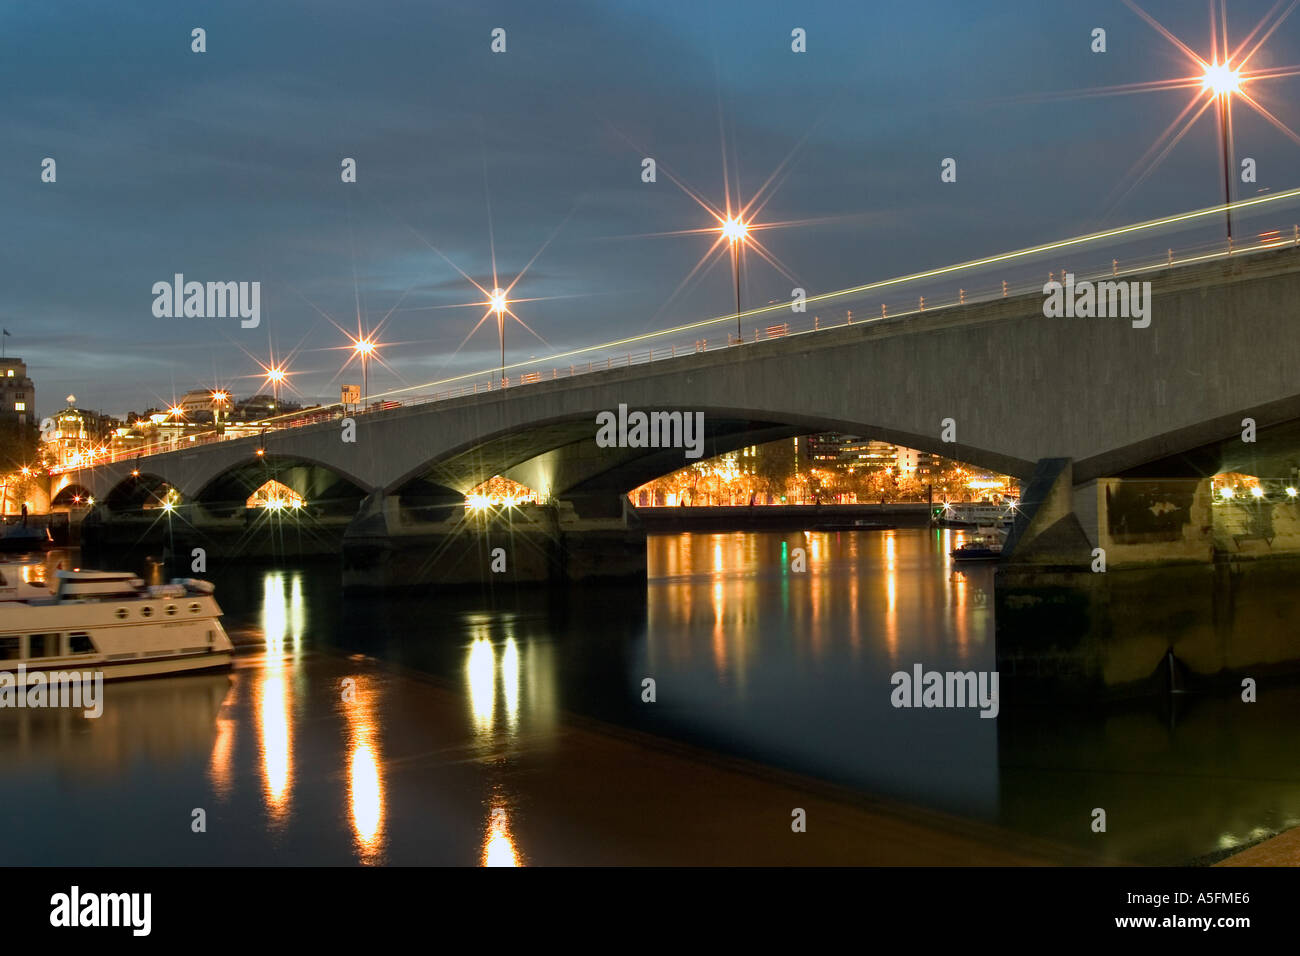 Waterloo Bridge at night. La Thames, London, England, UK Banque D'Images